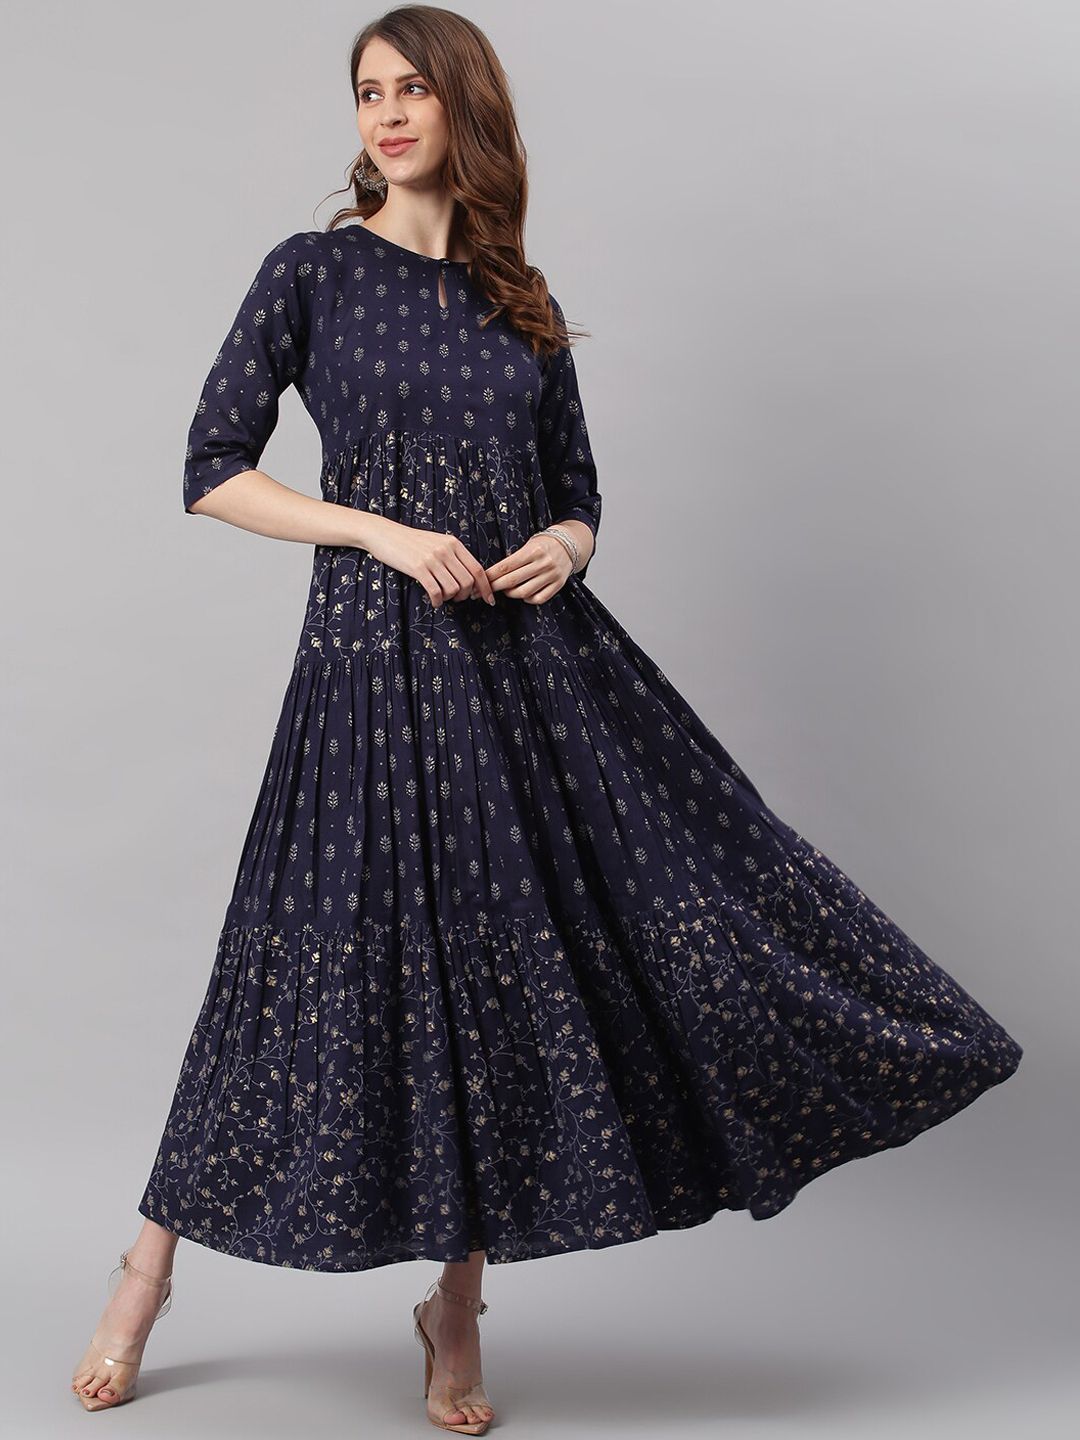 Janasya Navy Blue & White Ethnic Motifs Keyhole Neck Cotton Maxi Dress Price in India